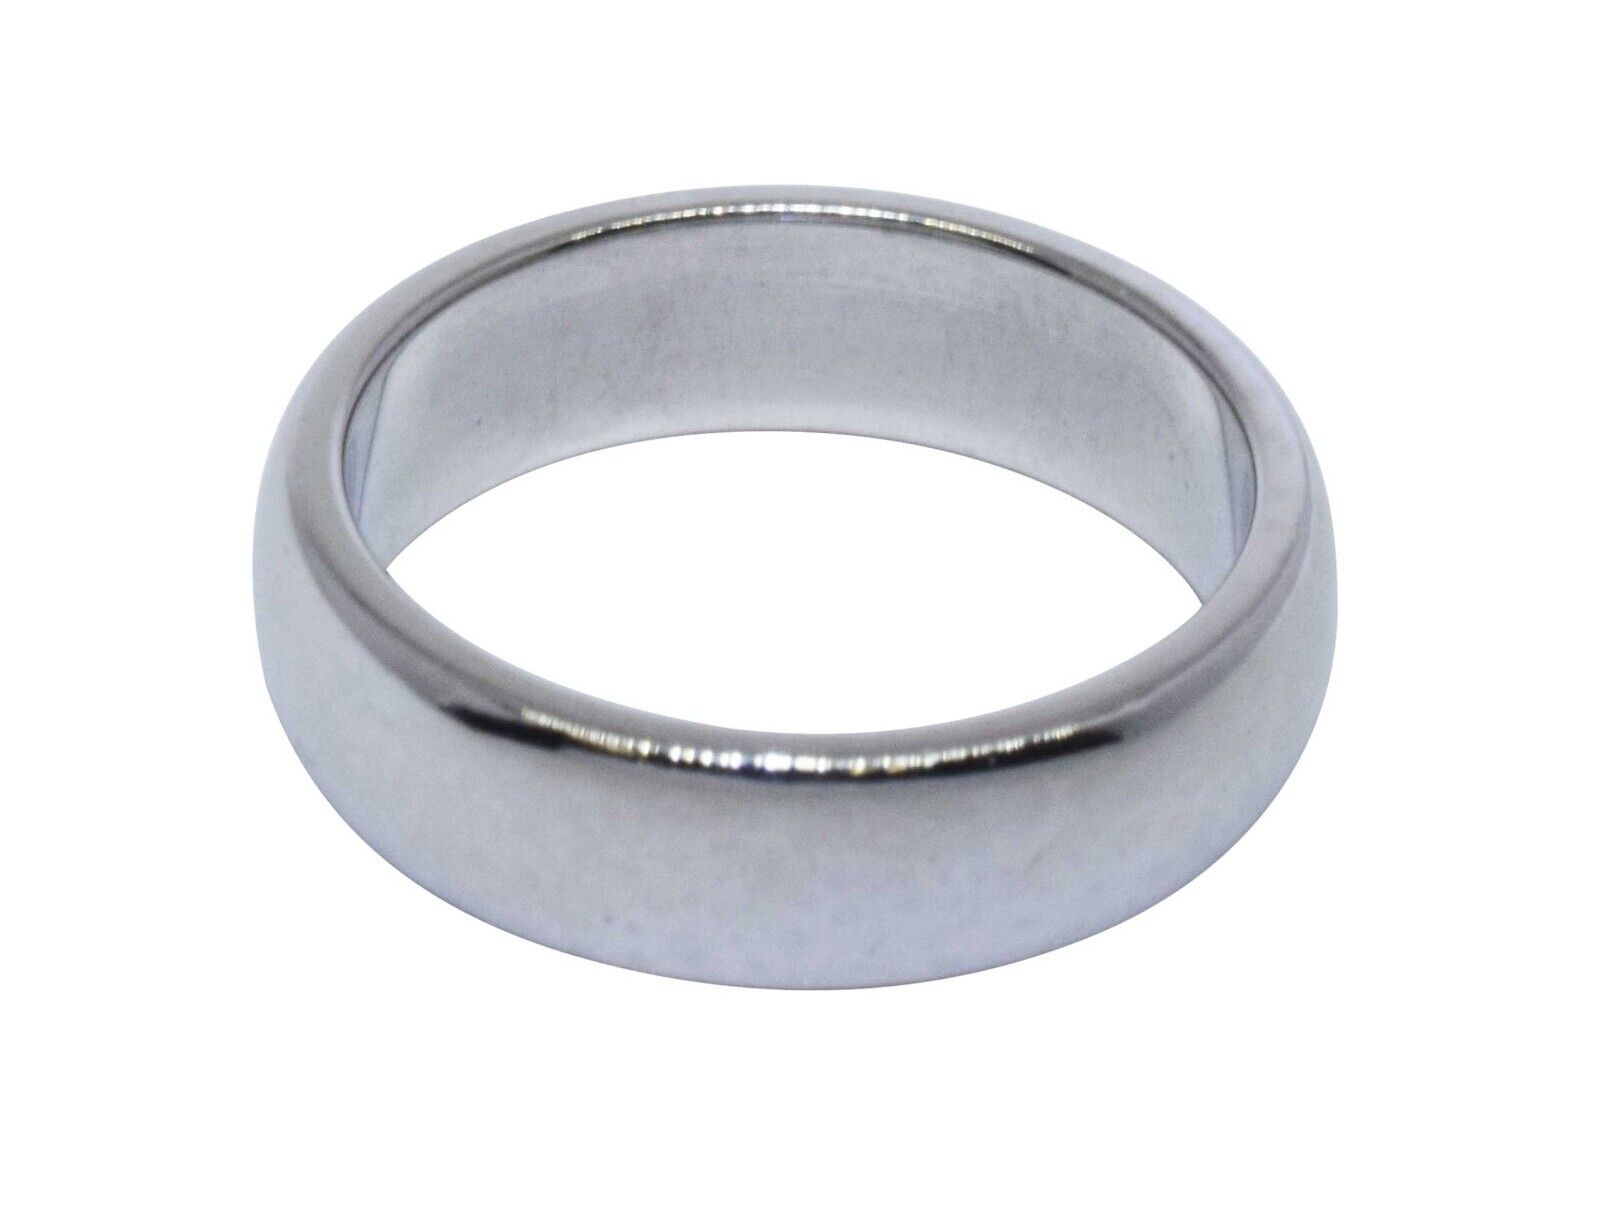 Tiffany & Co. Platinum 6mm Wedding Band Ring Size 7.75